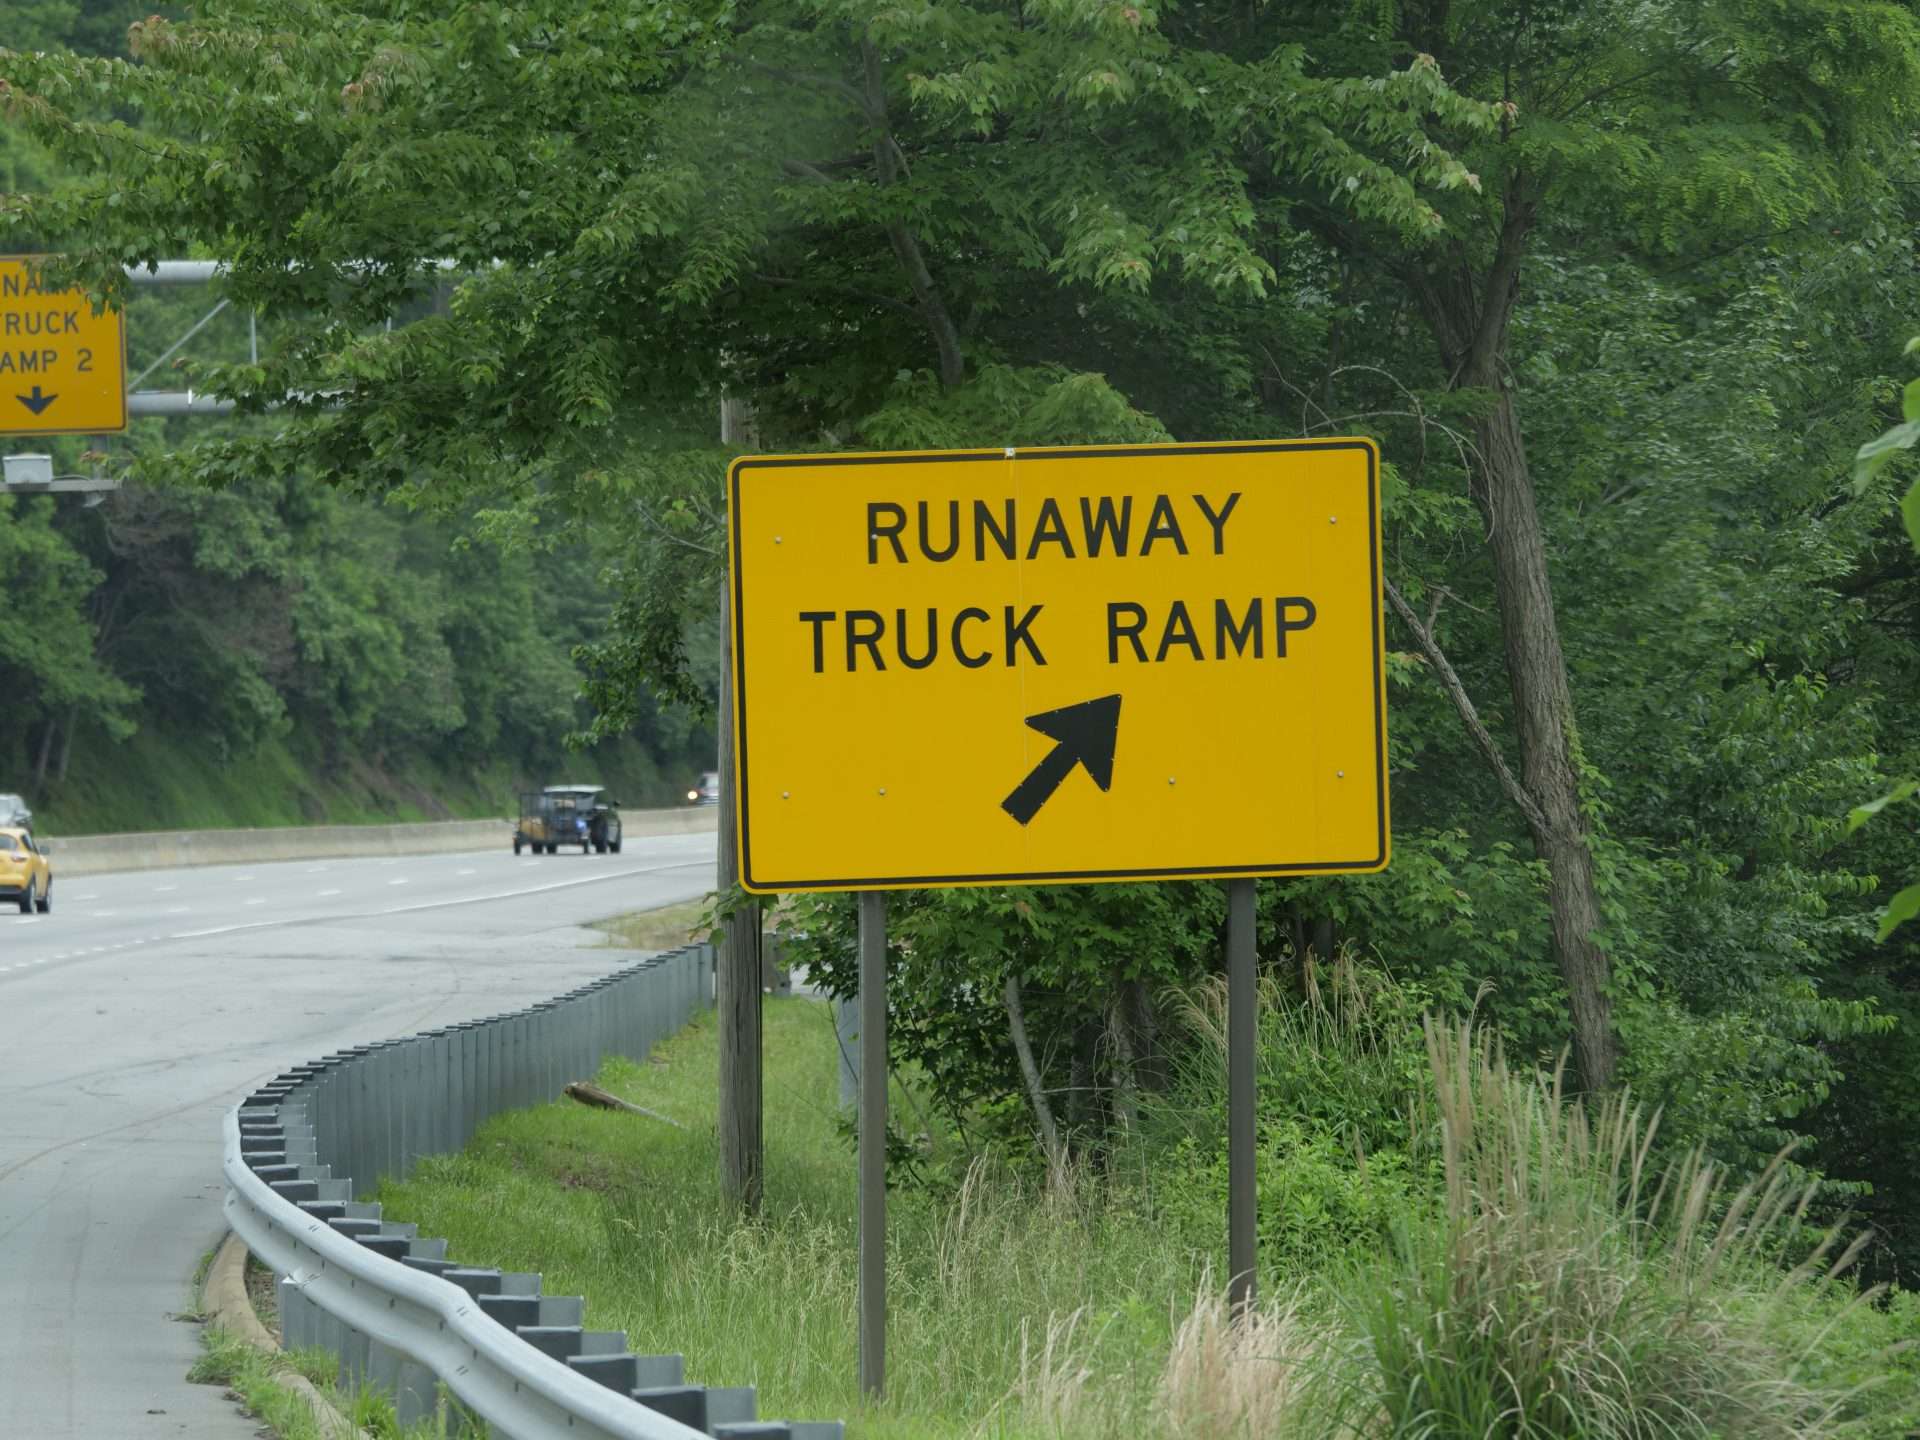 Runaway truck ramp sign on highway